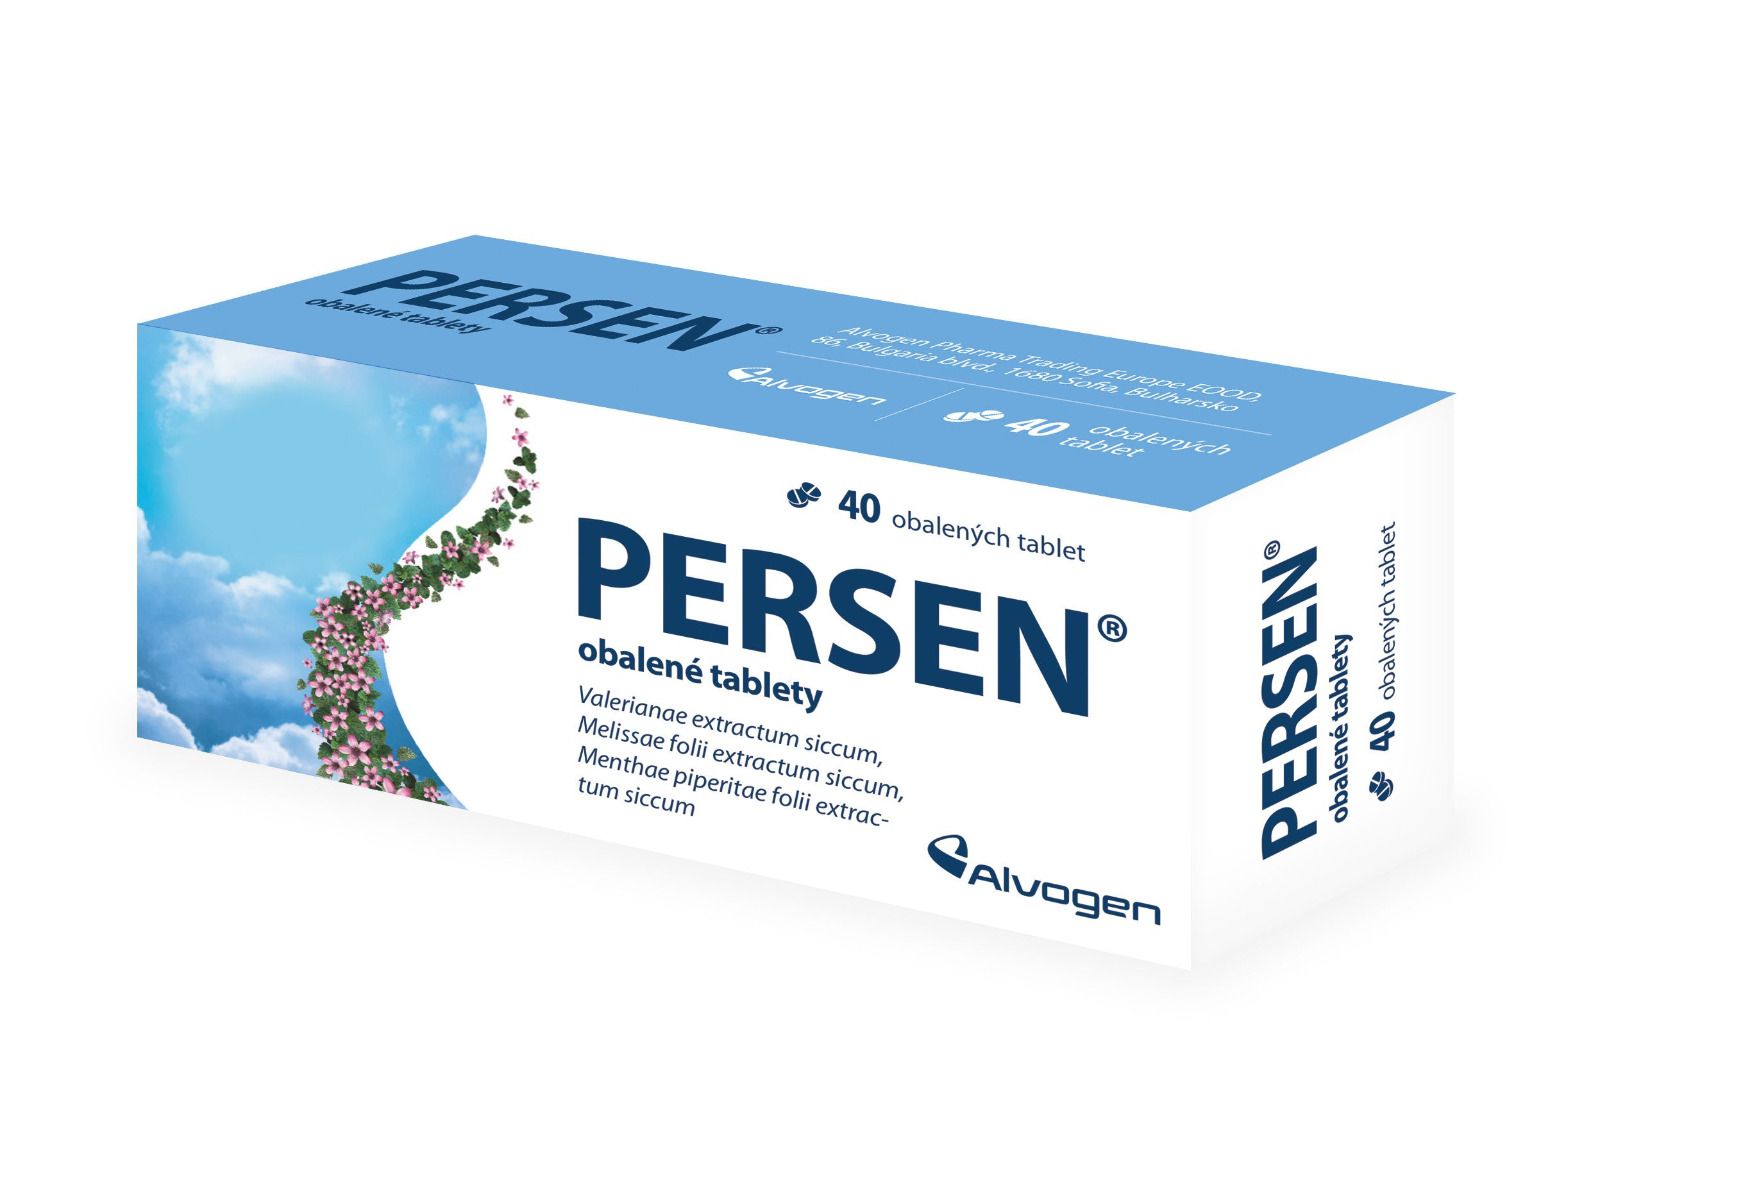 Persen 40 obalených tablet Persen